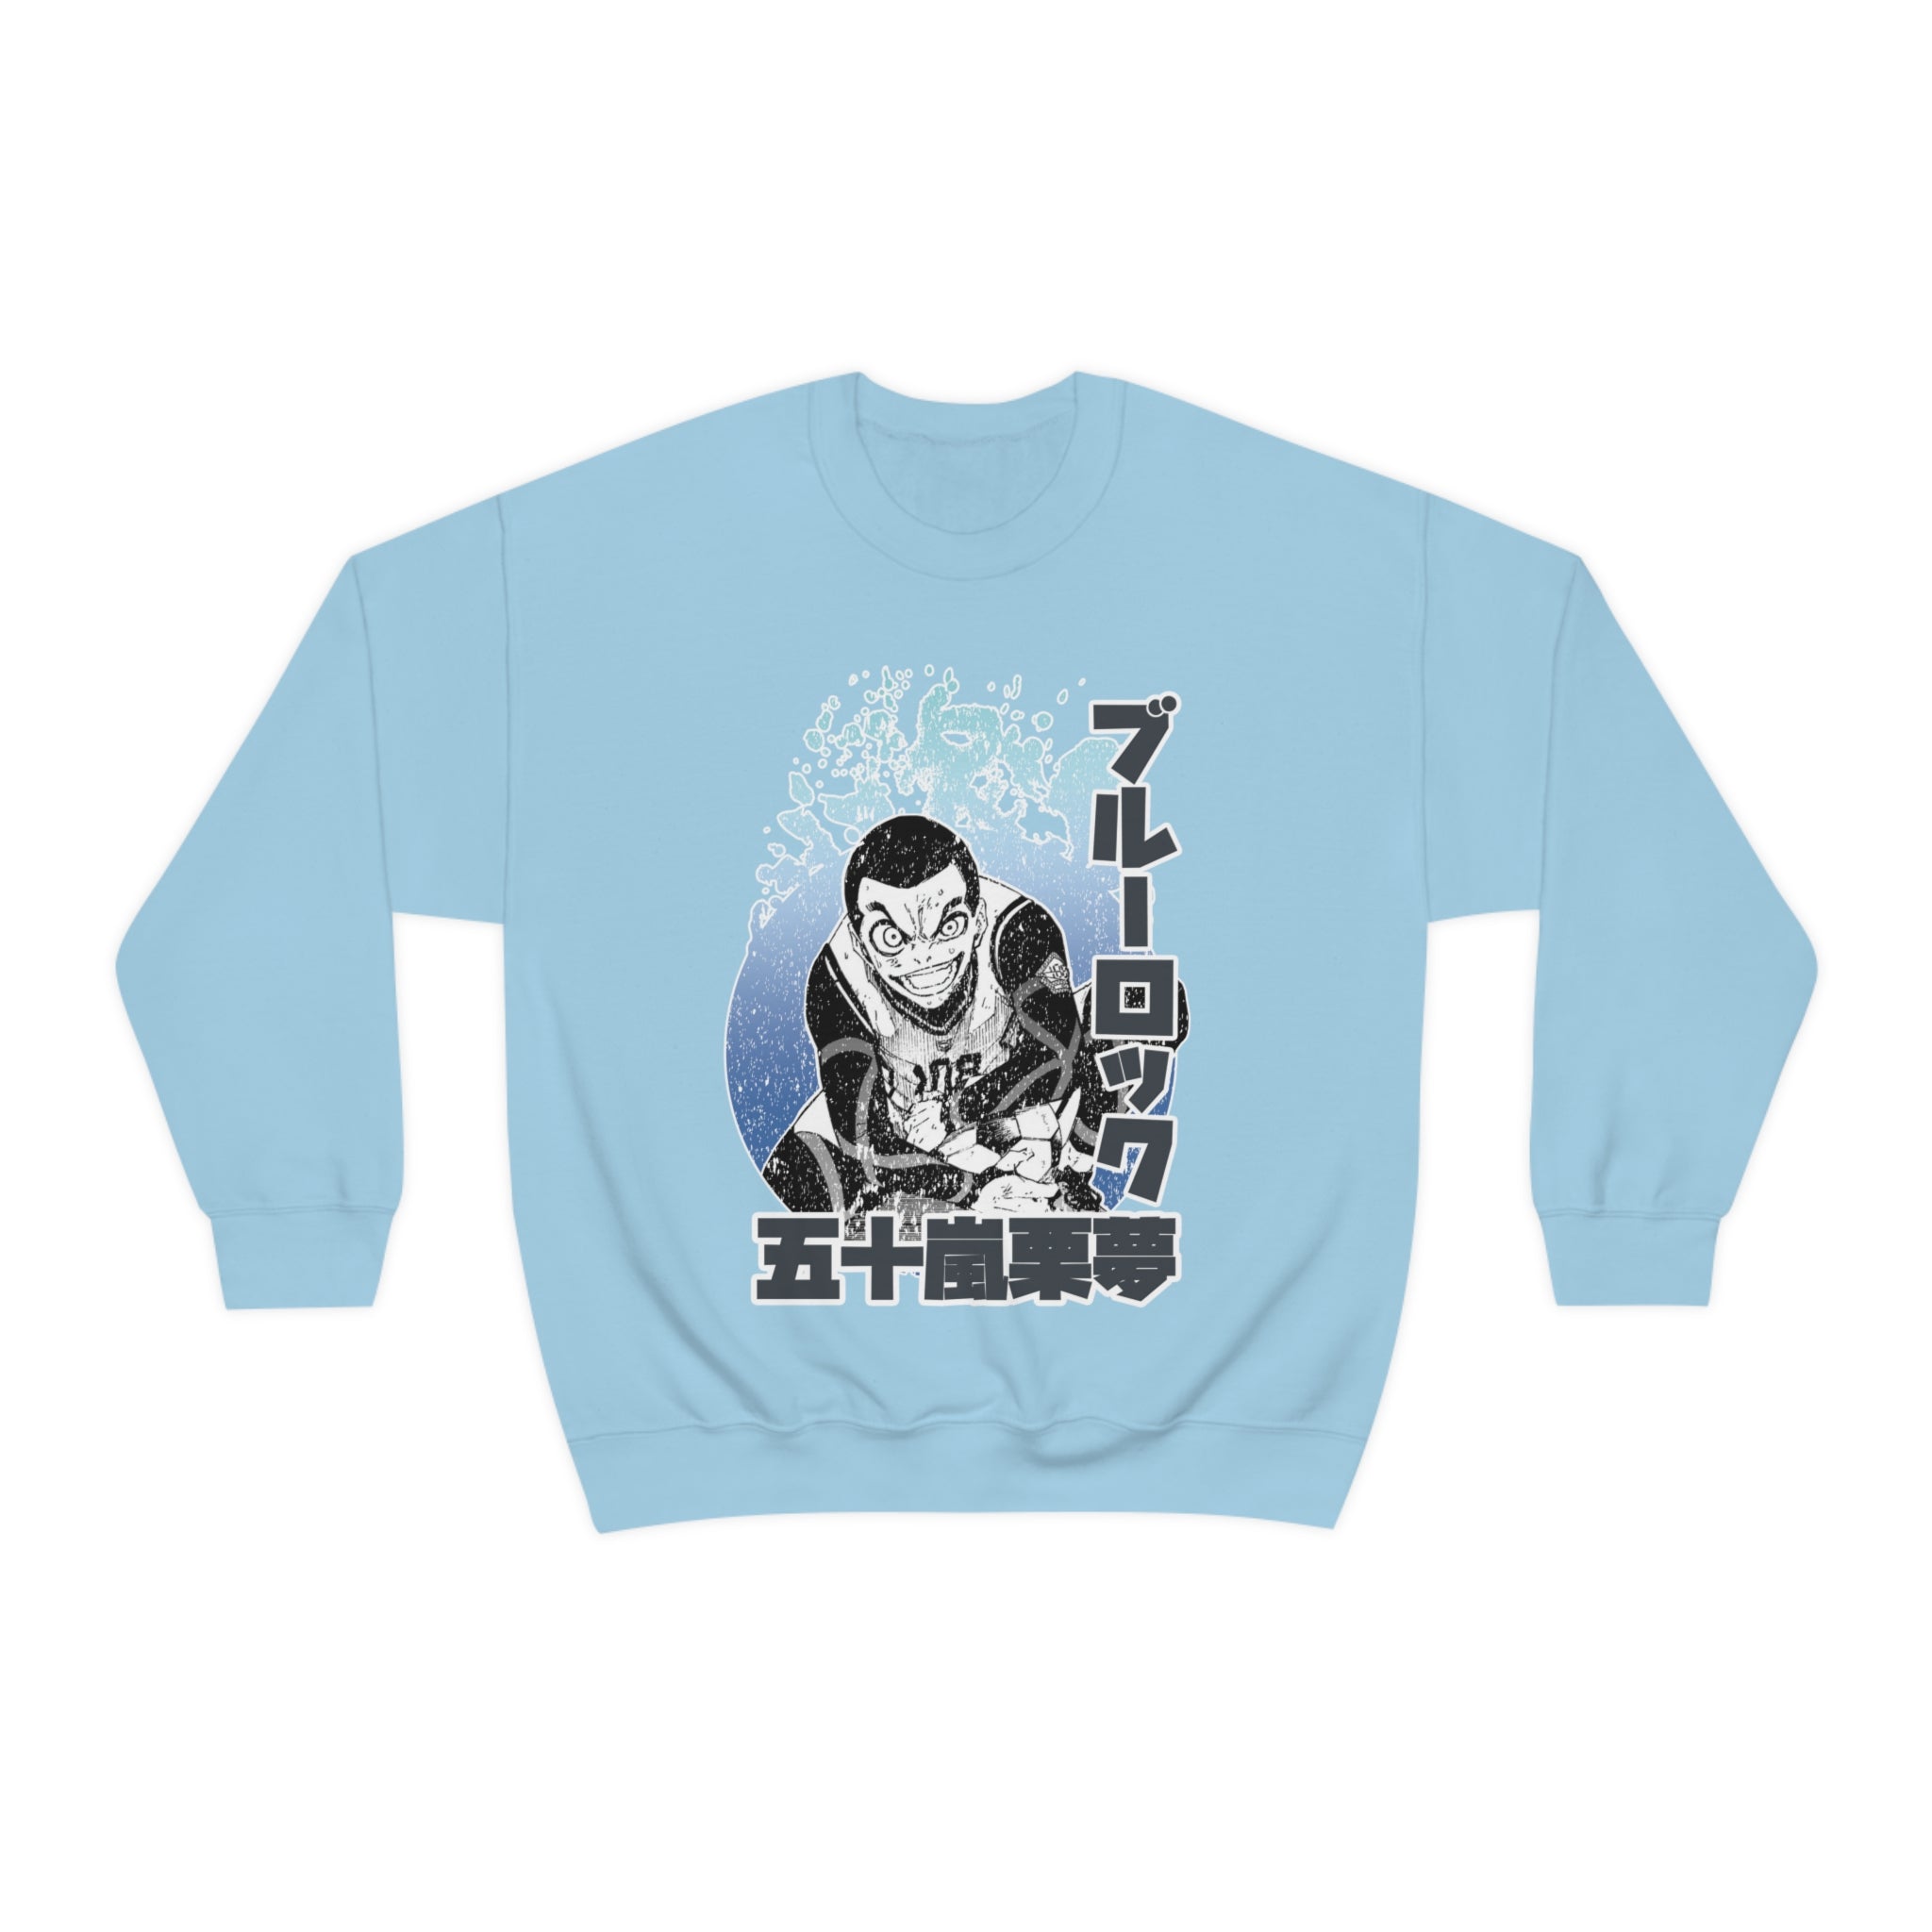 The Monk Crew Neck Sweatshirt